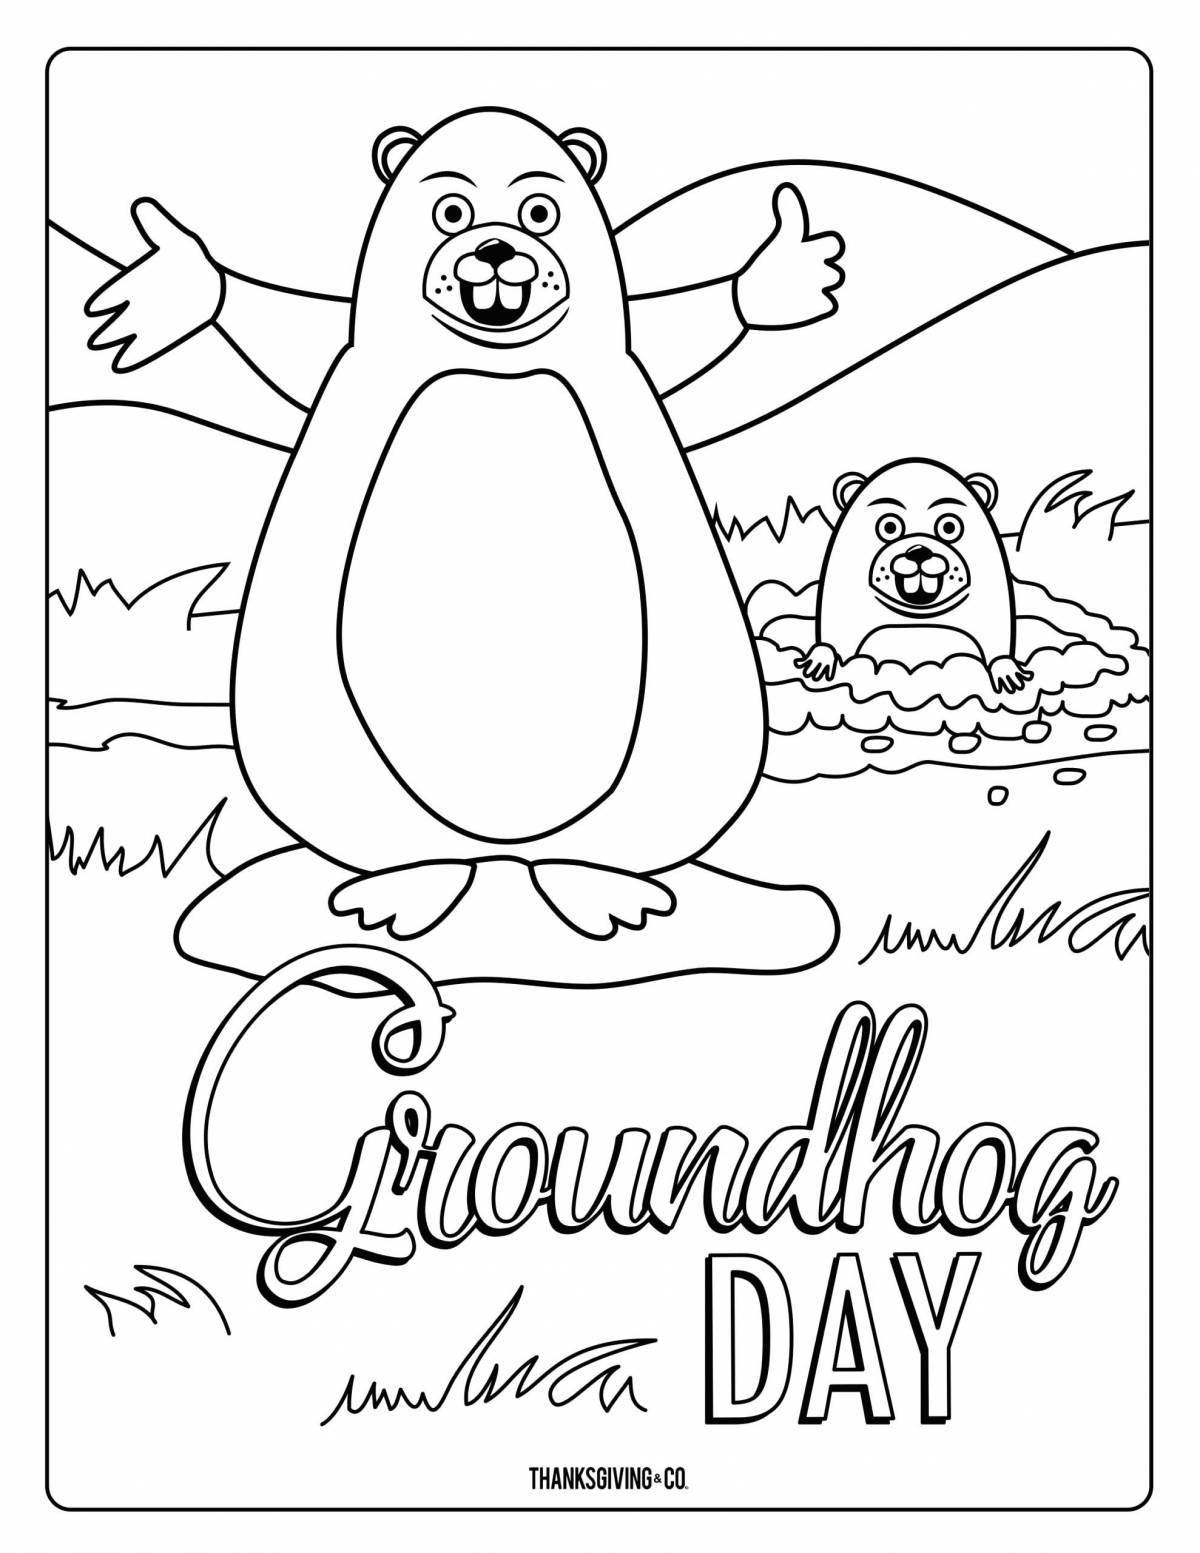 Impressive groundhog day coloring book